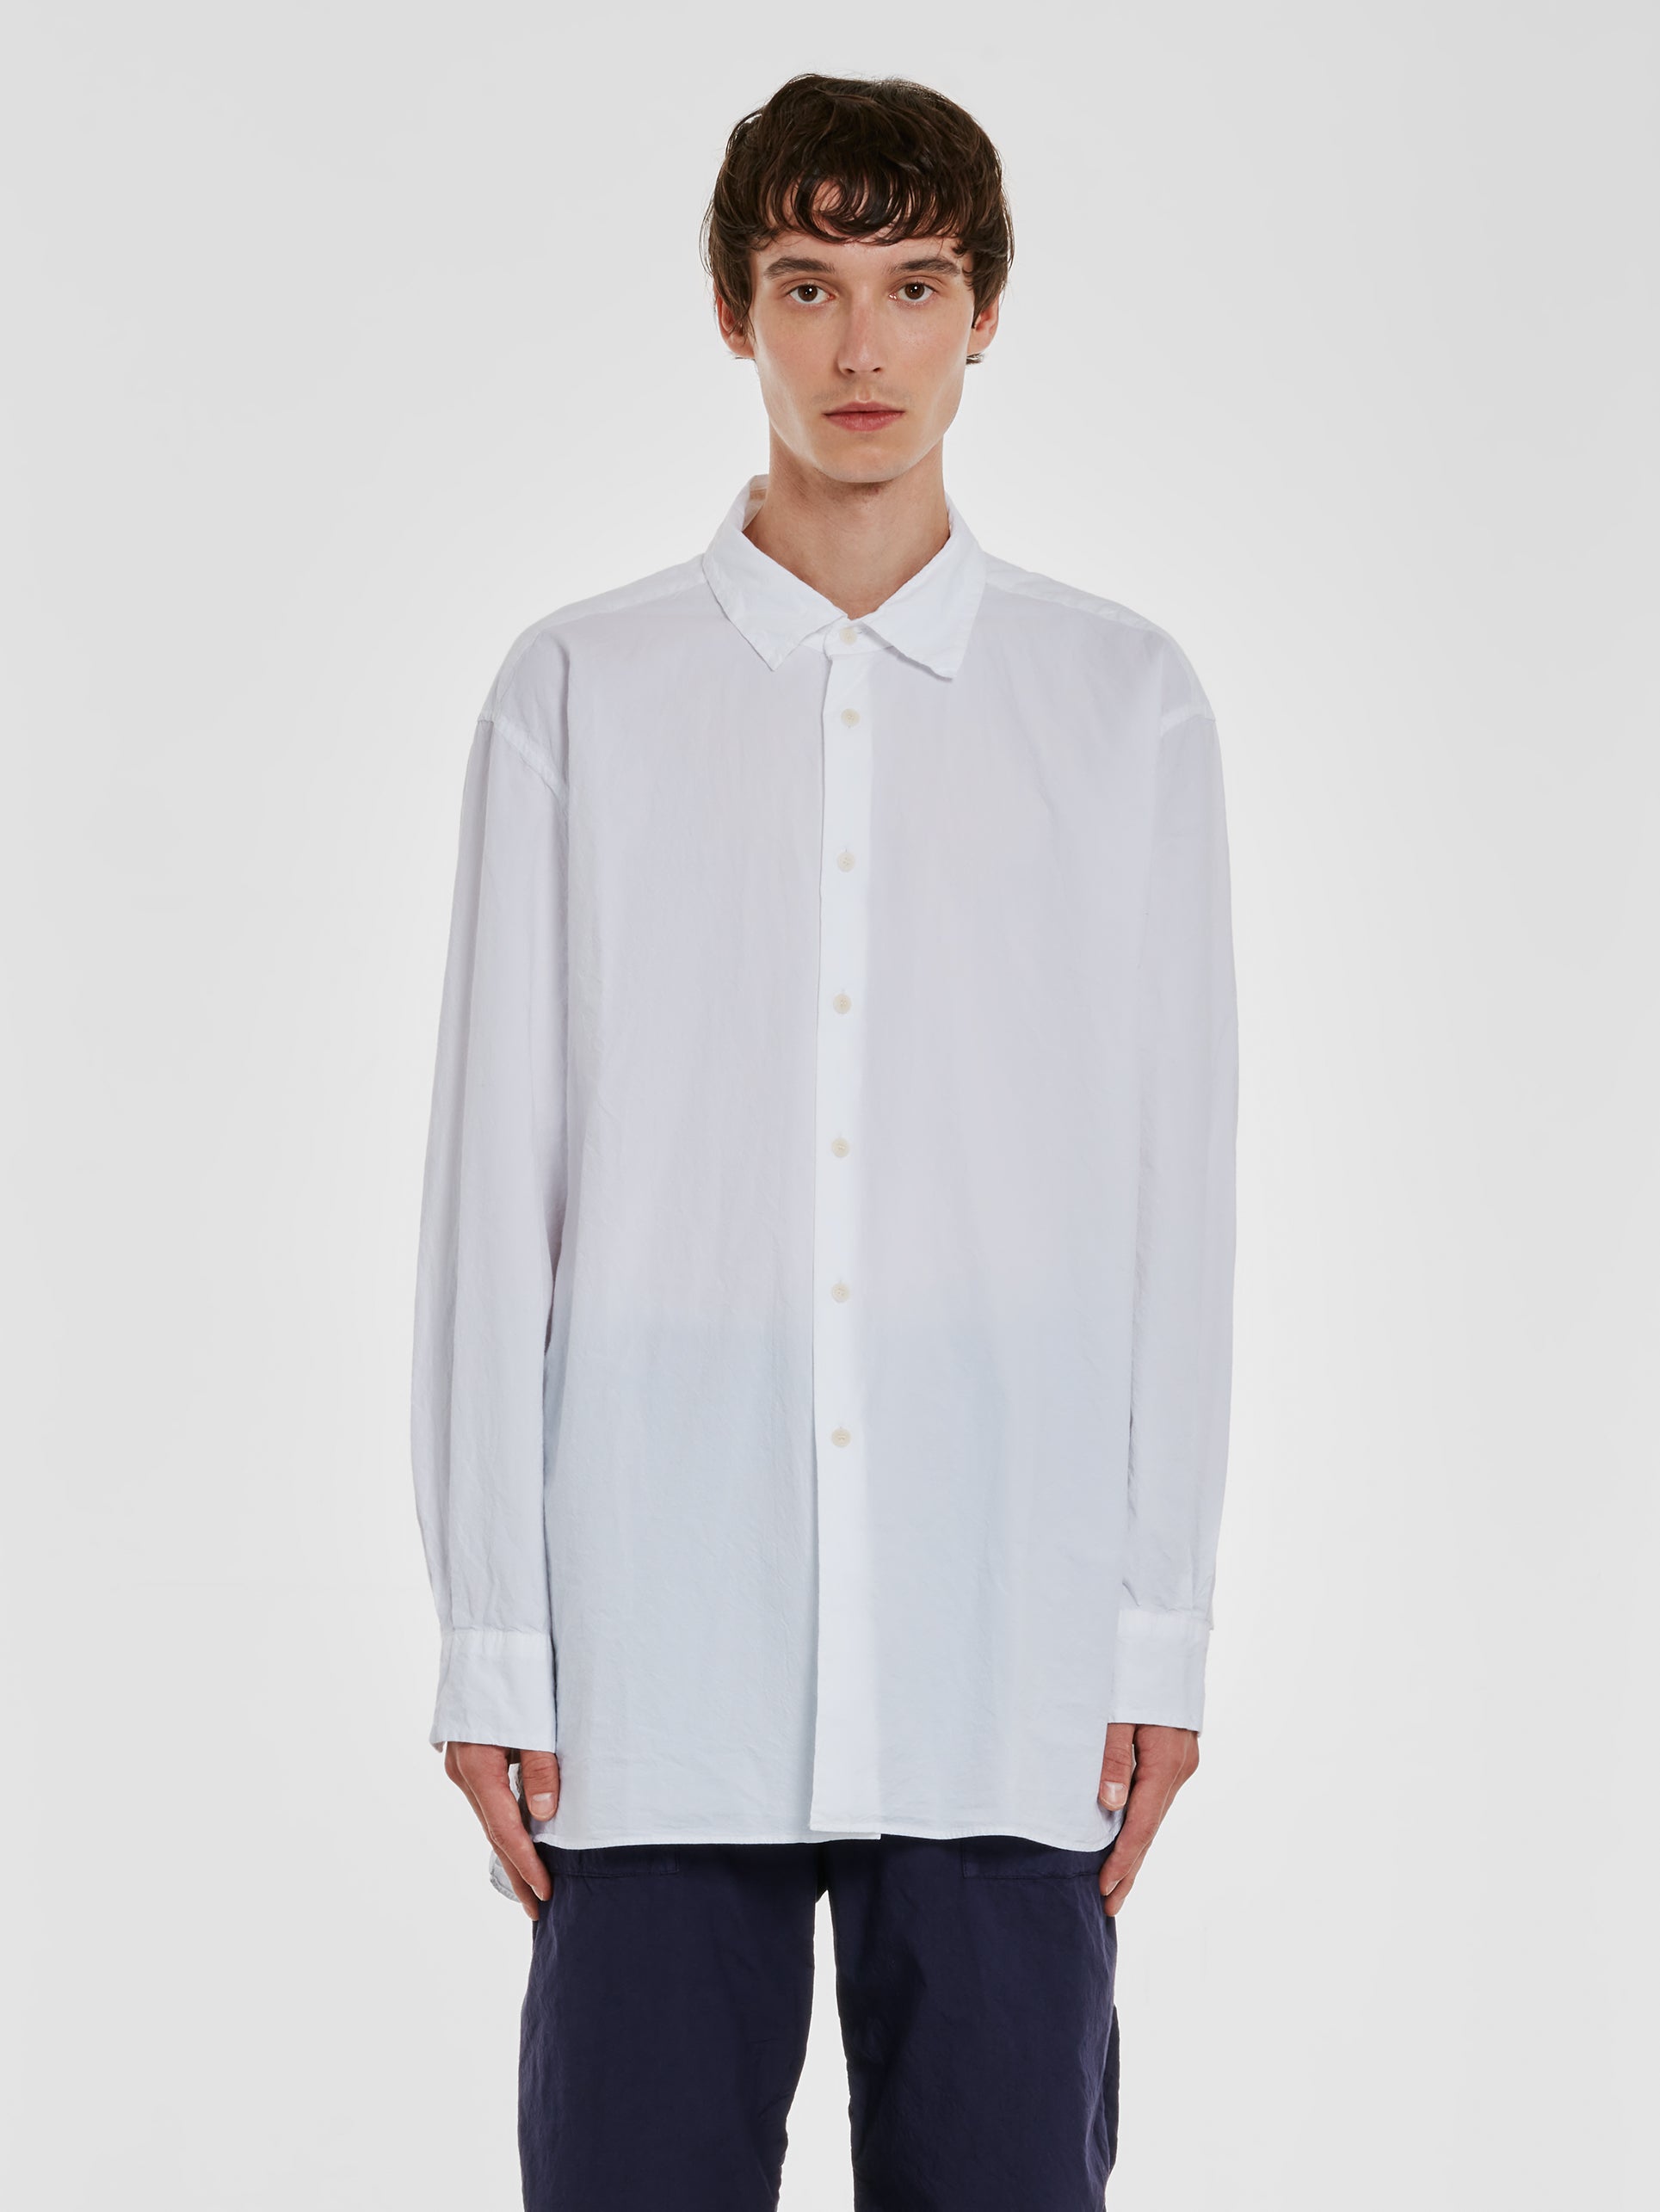 Casey Casey - Men’s Double Dyed Big Raccourcie Shirt - (Off White)